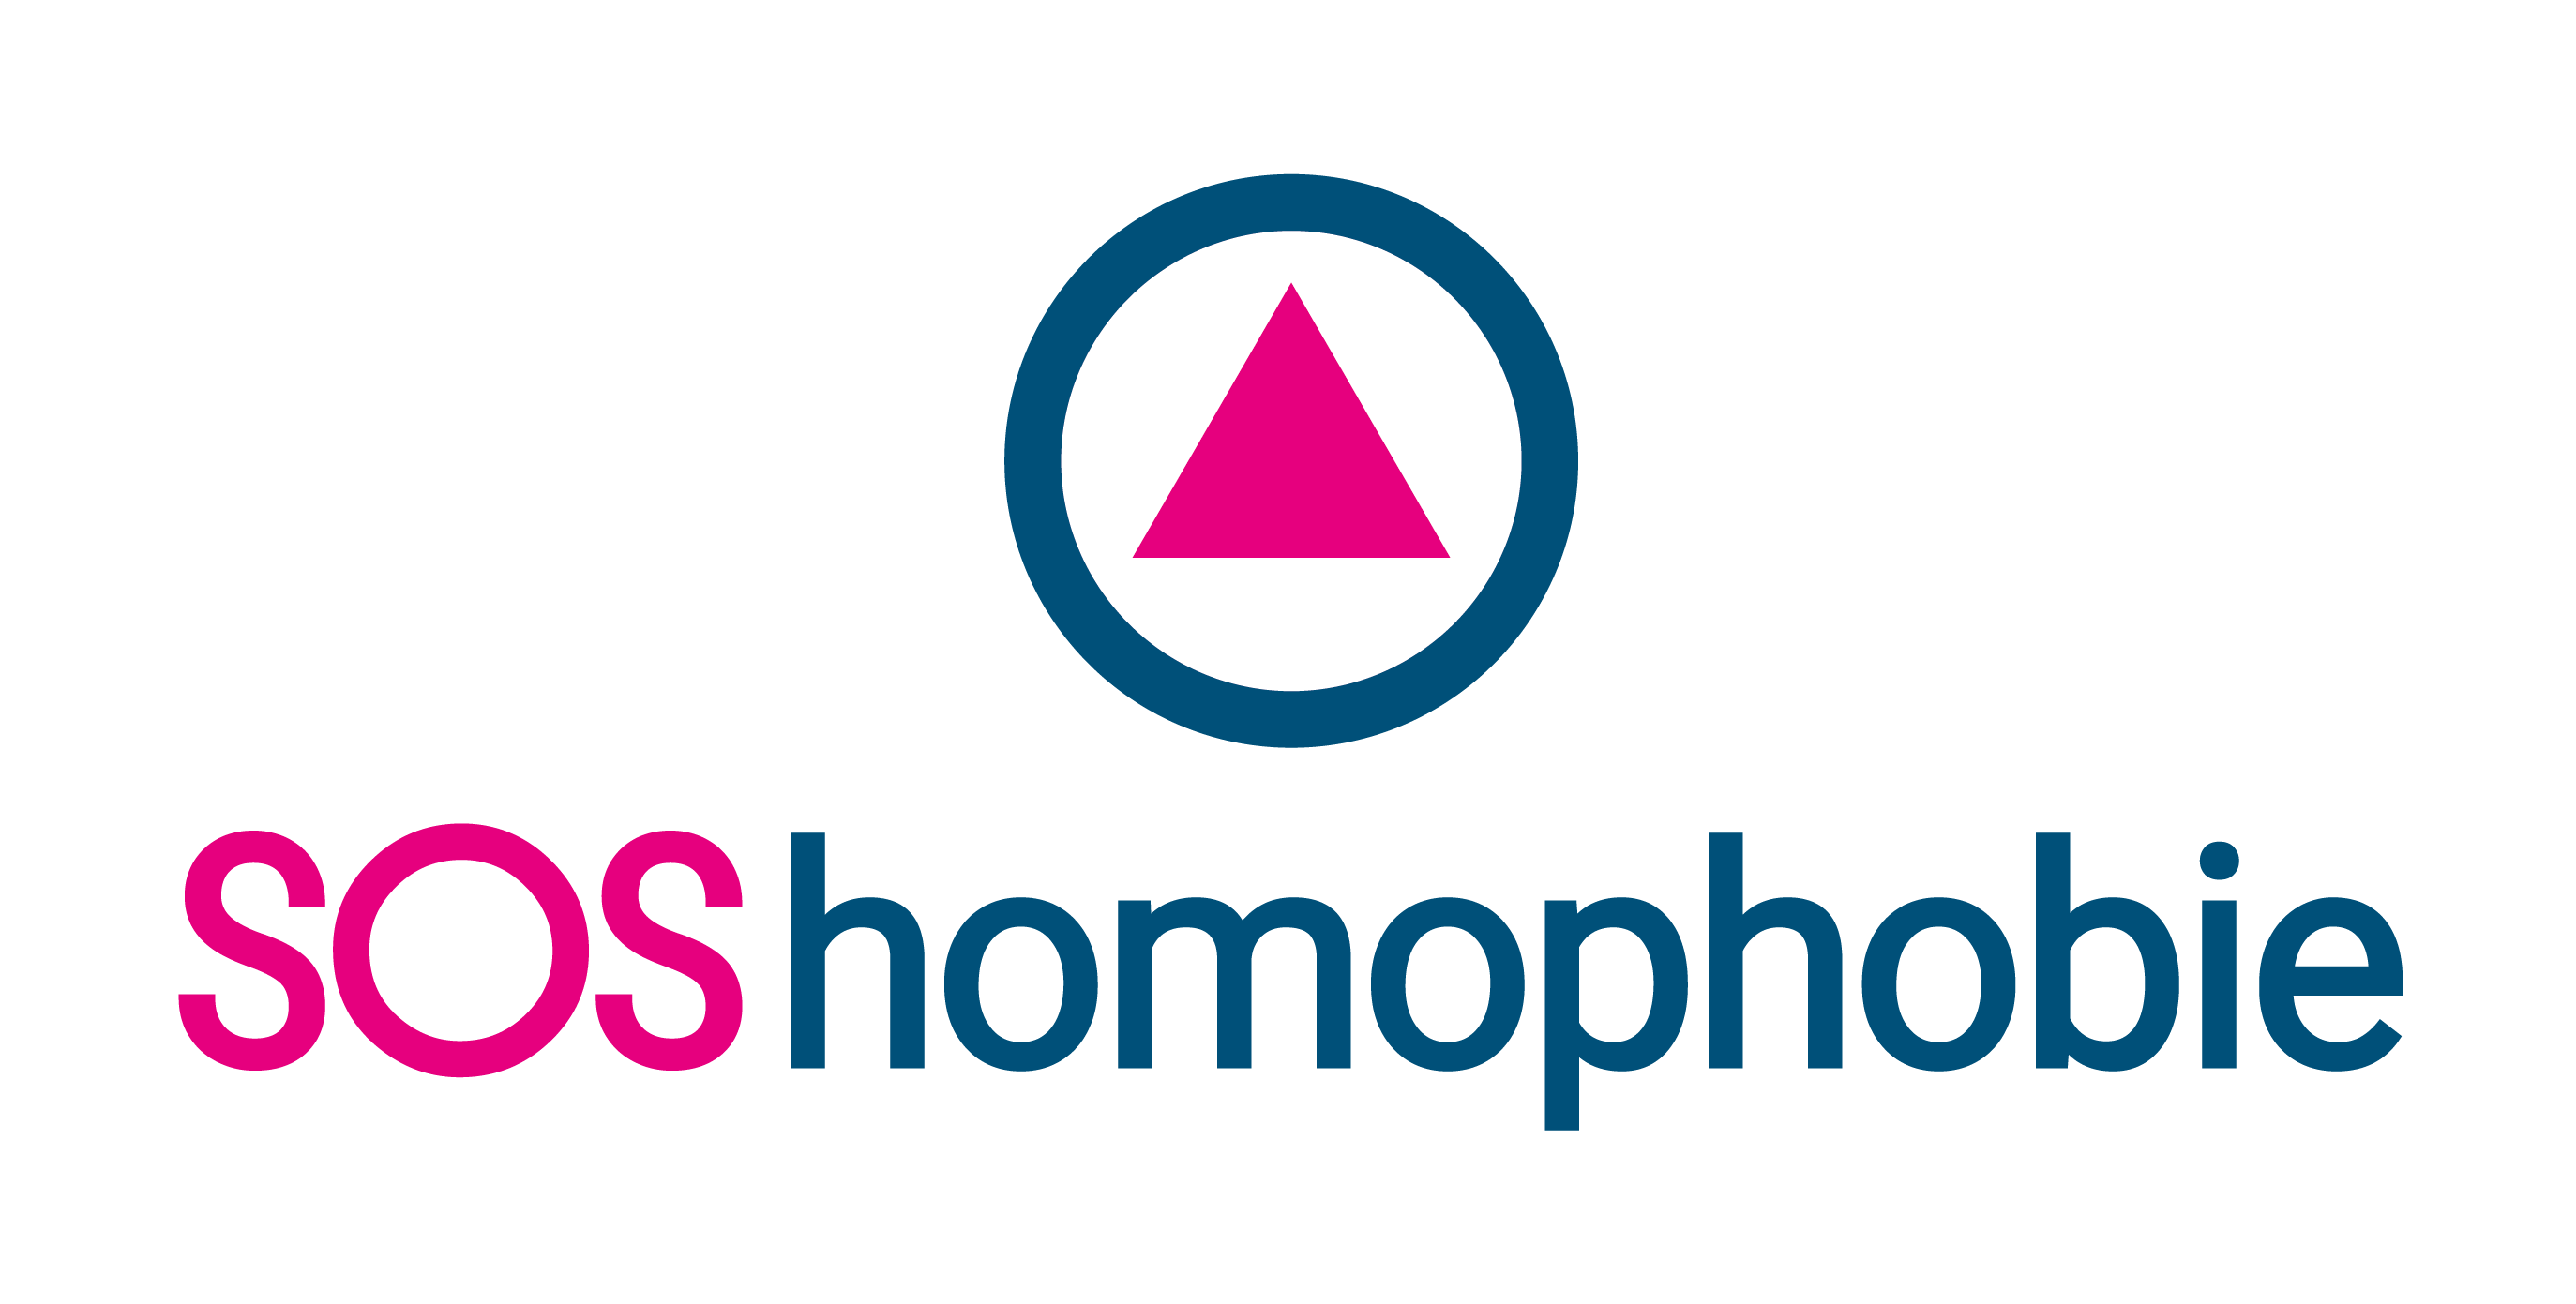 Bannière de SOS homophobie